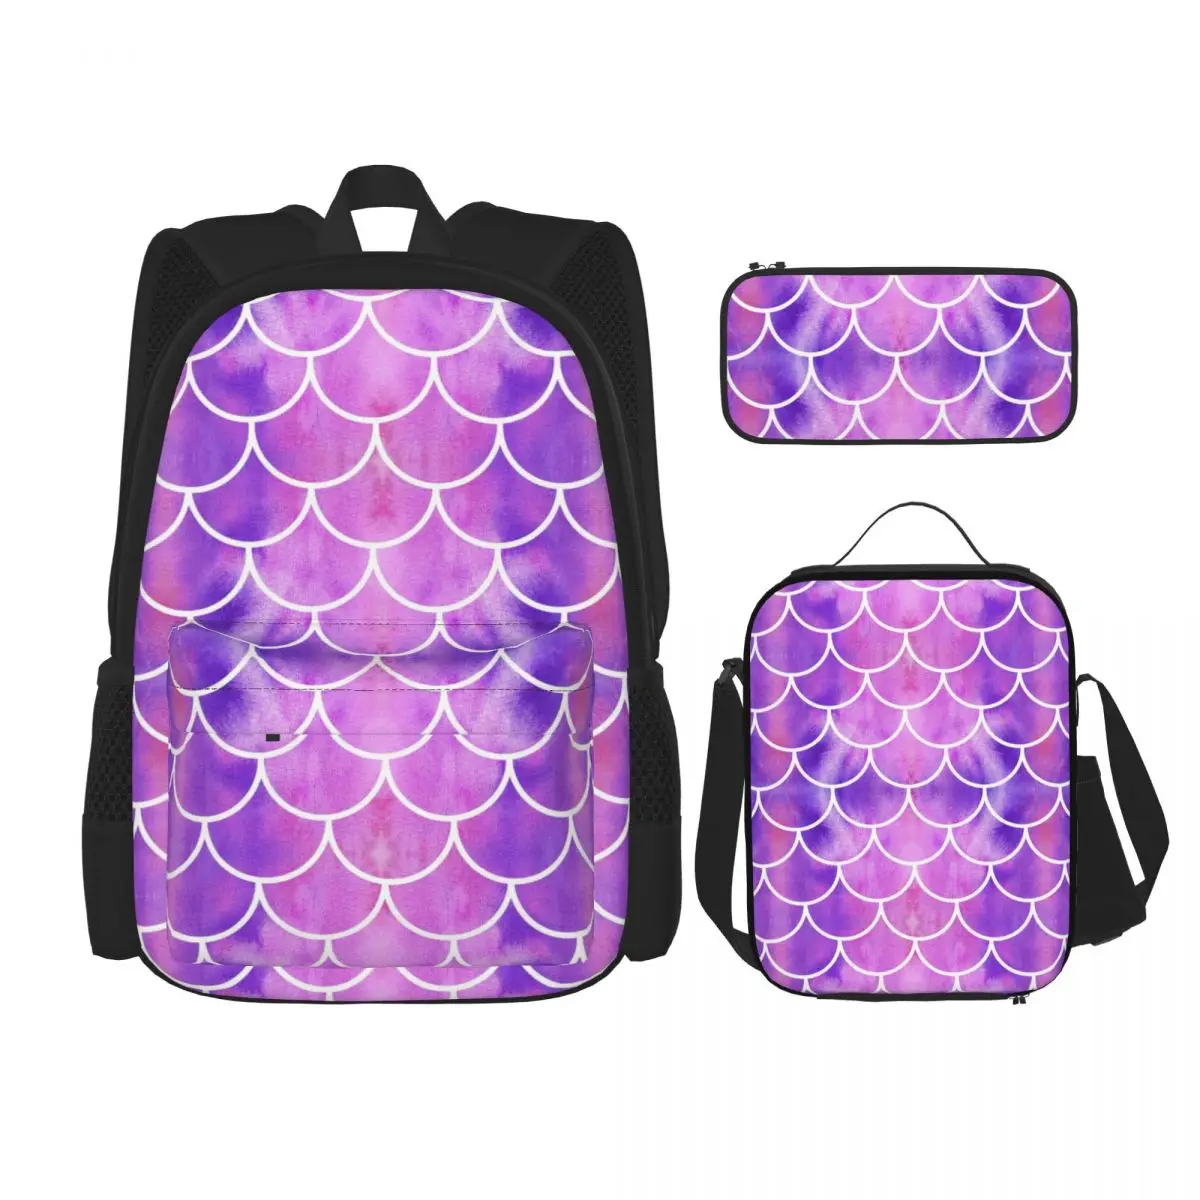 

3 Pcs Pink Mermaid Scales Backpack Unique Prints Knapsack for Teenagers Girls Boys Travel Bagpack Children School Bags